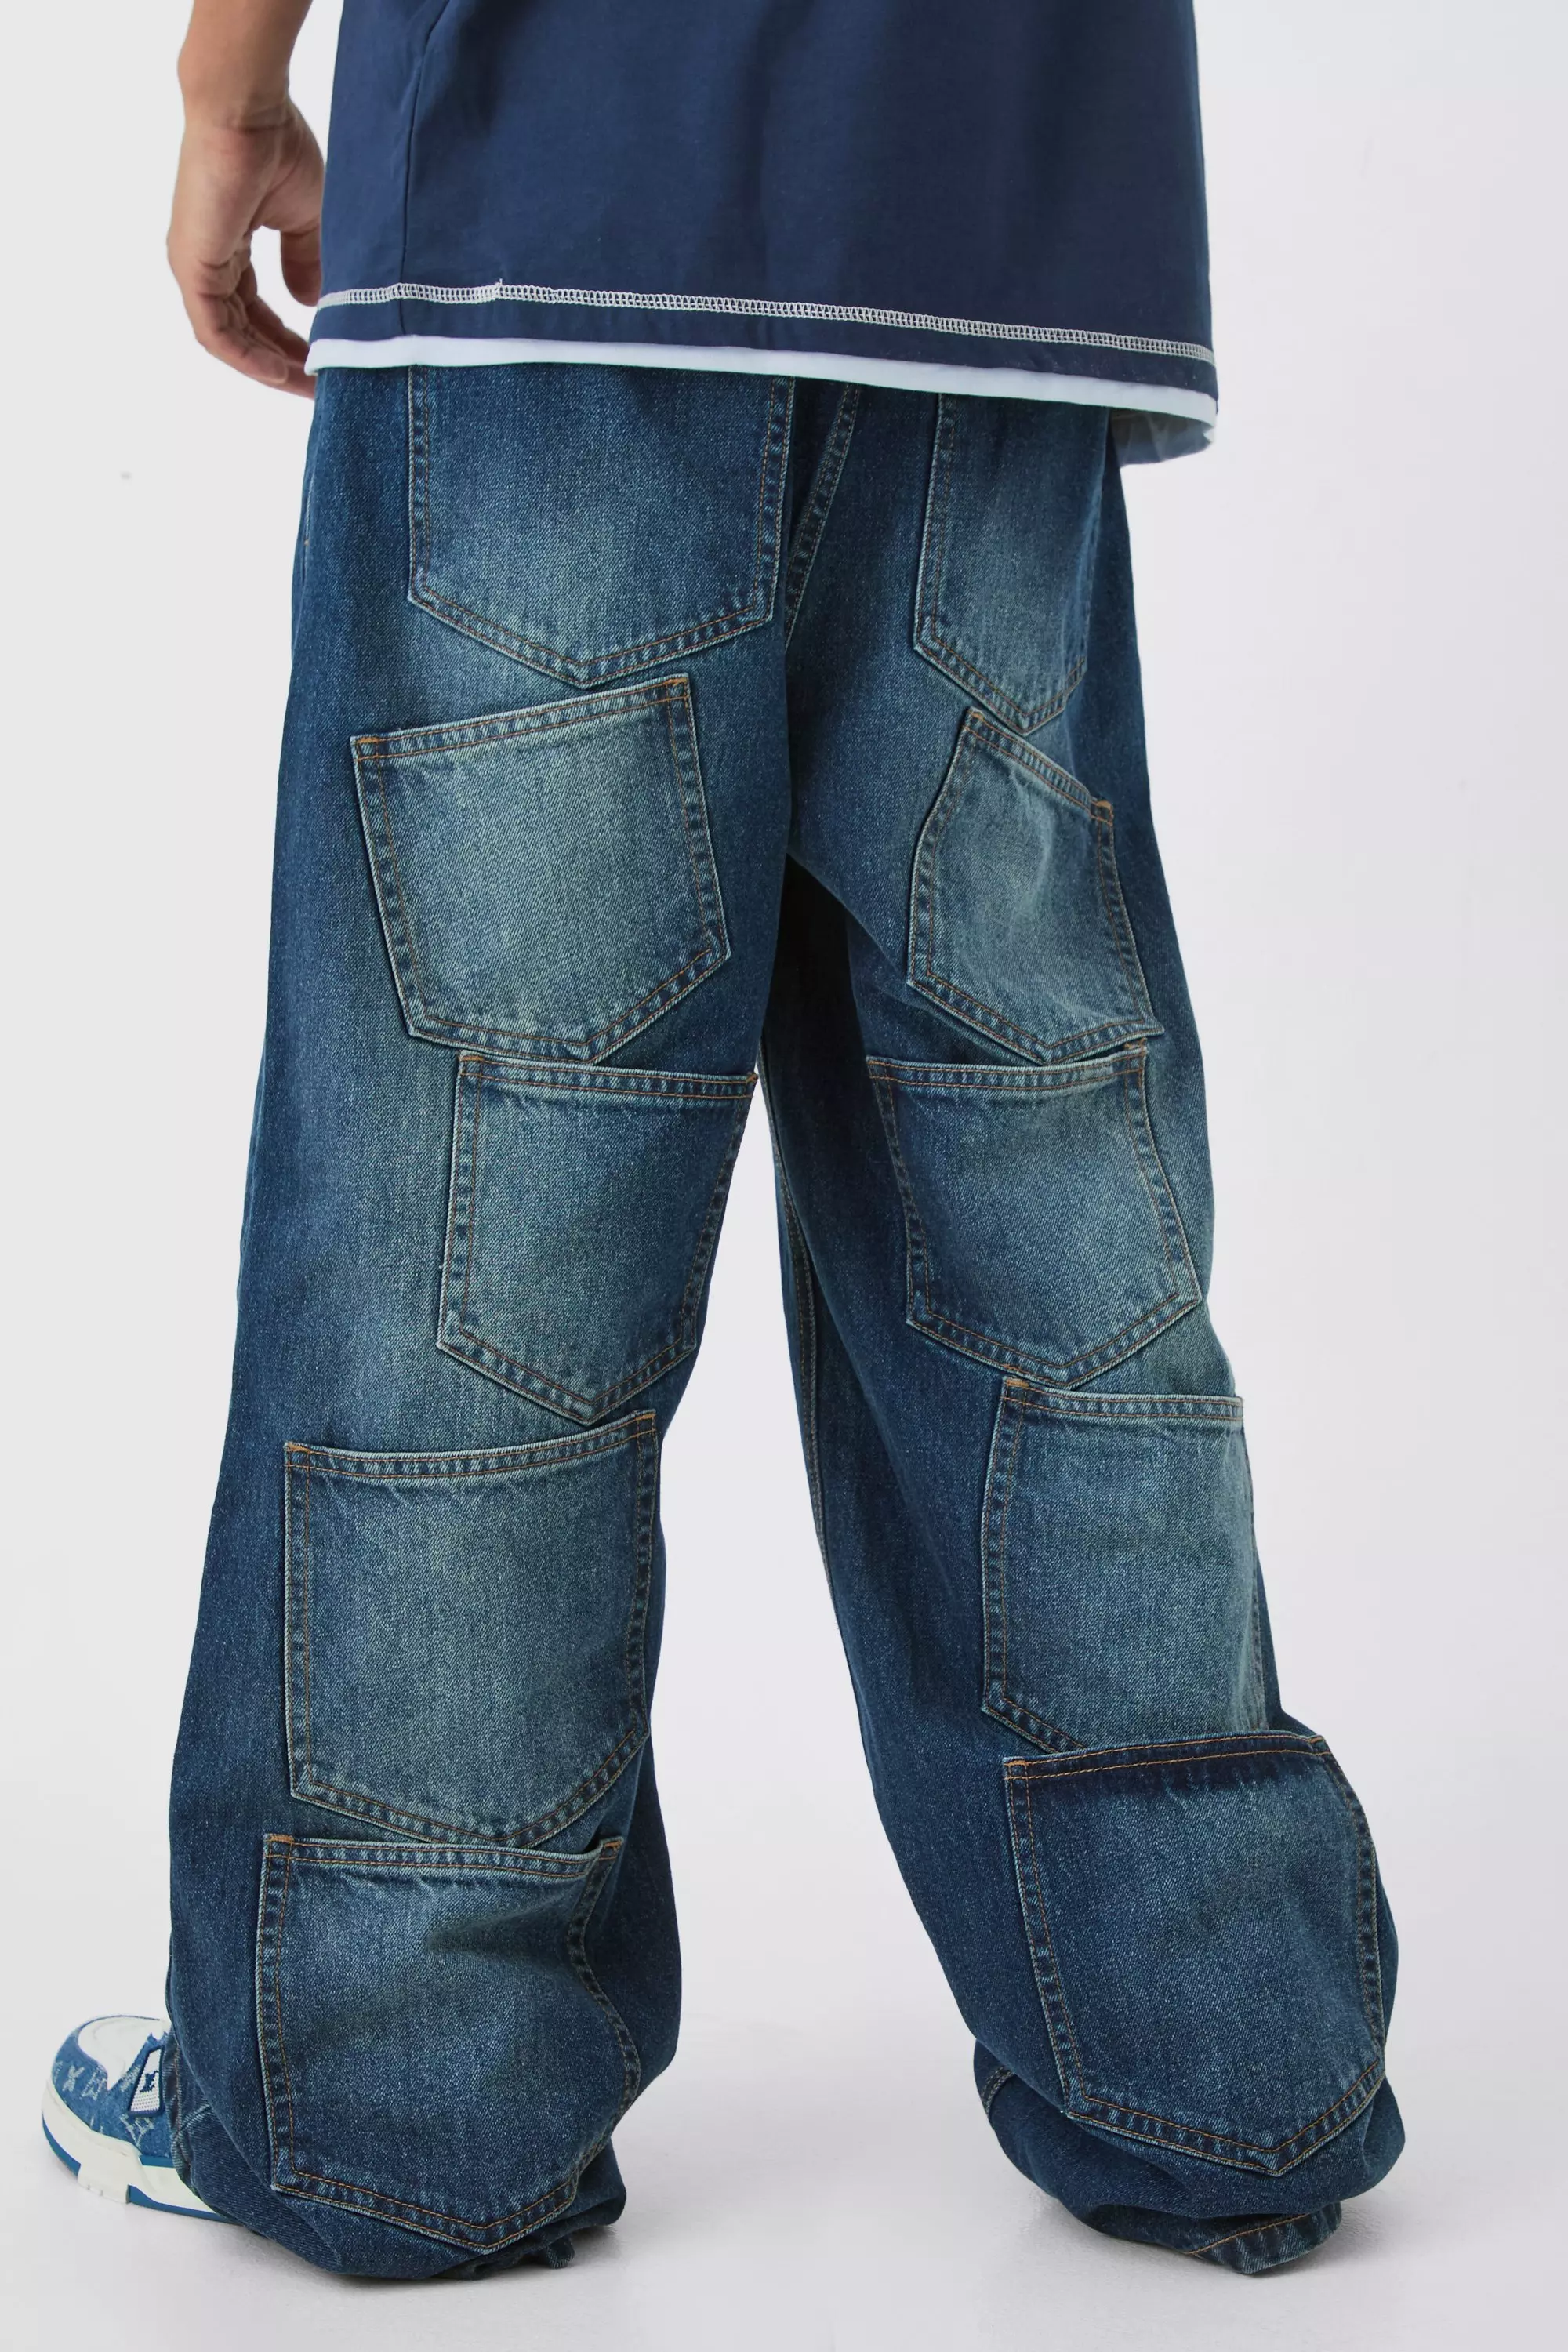 Extreme Baggy Rigid Multi Pocket Denim Jean In Antique Wash Antique wash